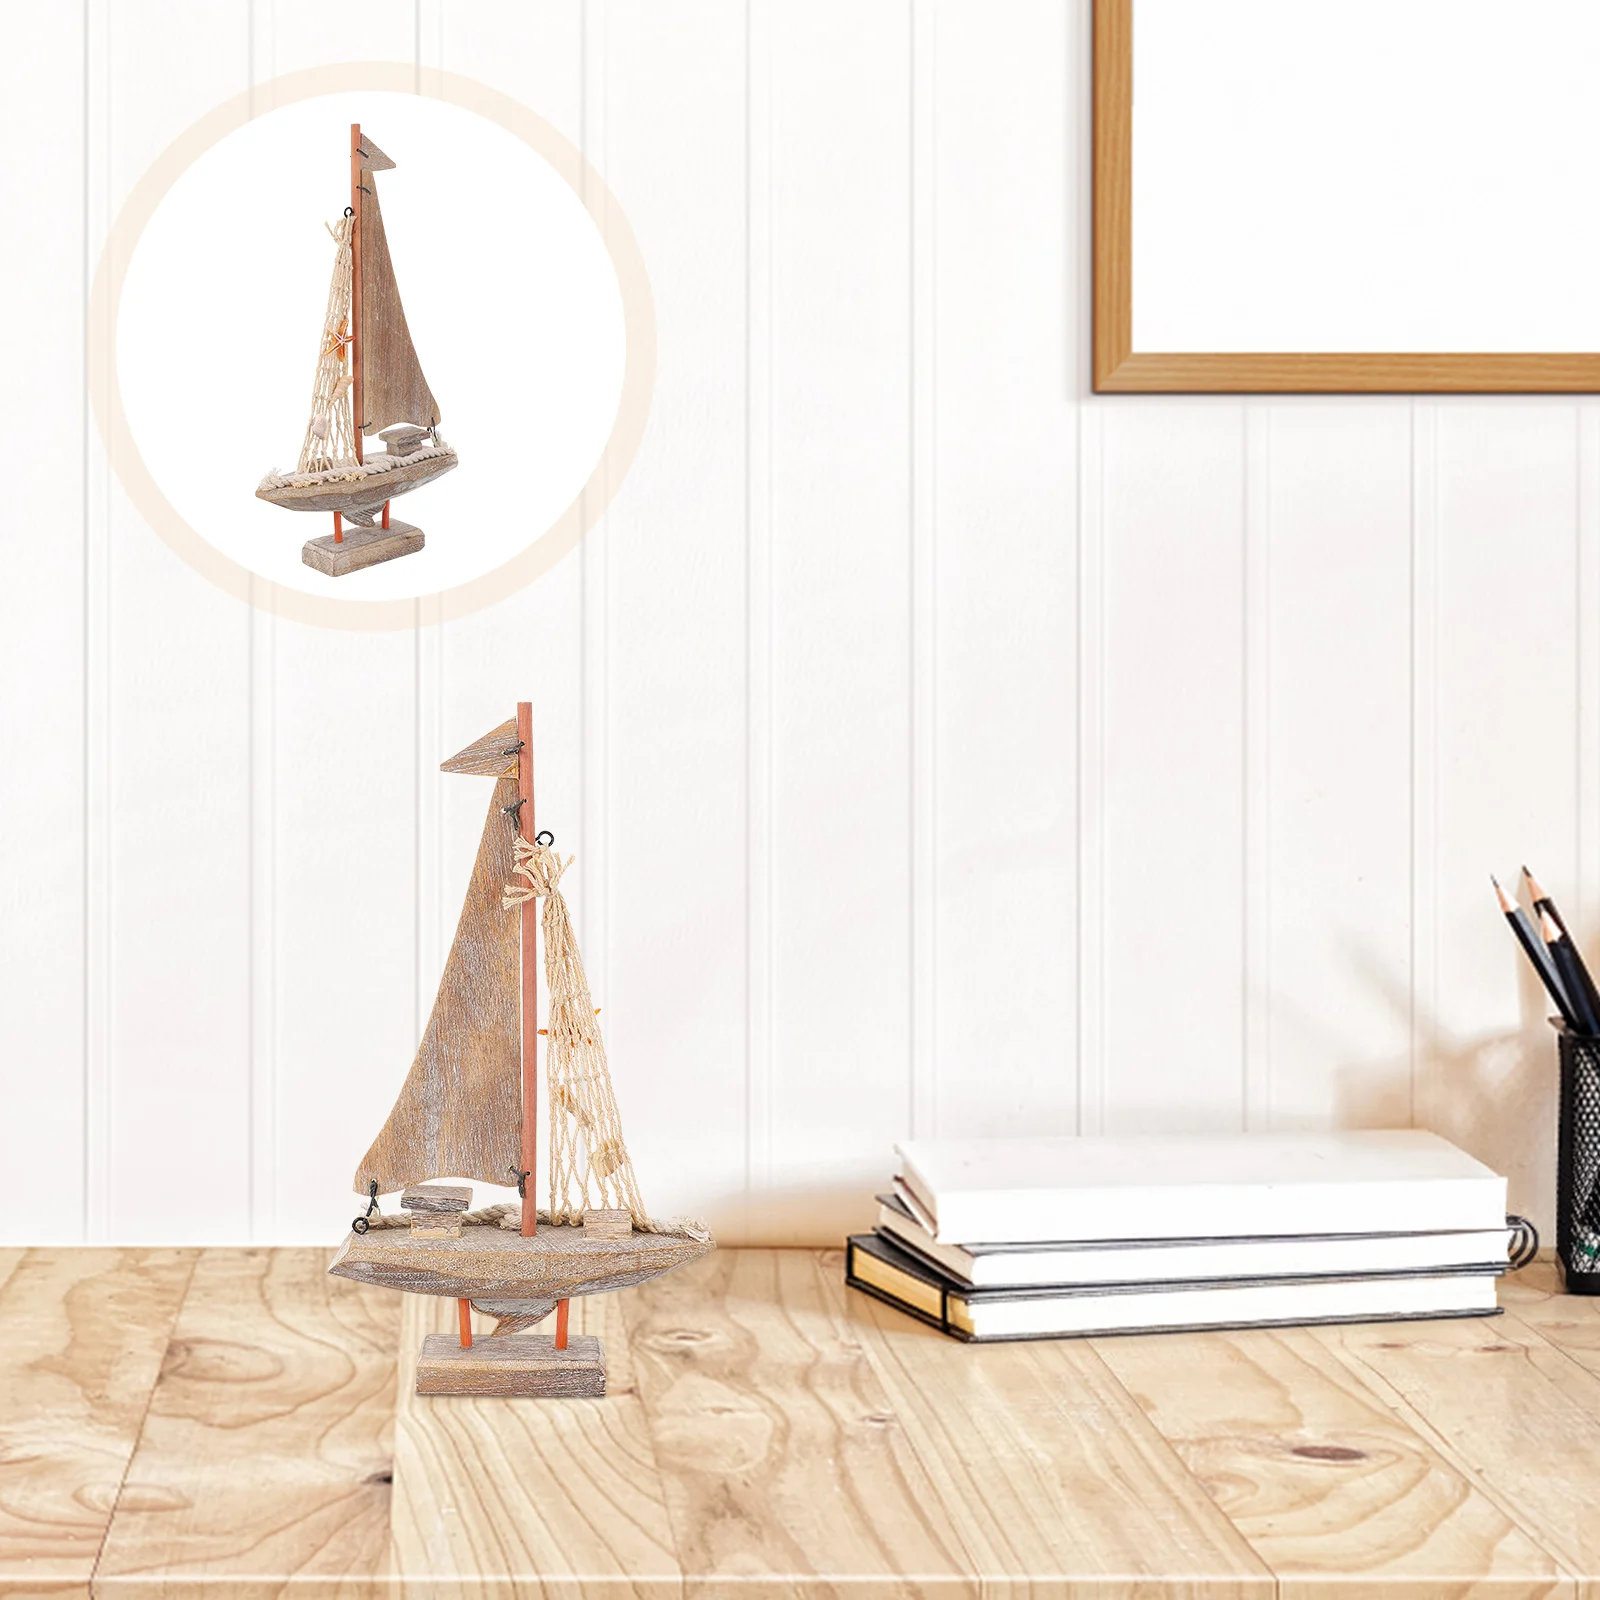 

Wooden Sailboat Model Decor Nautical Decor Sailing Home Office Ocean Theme Party Decoration